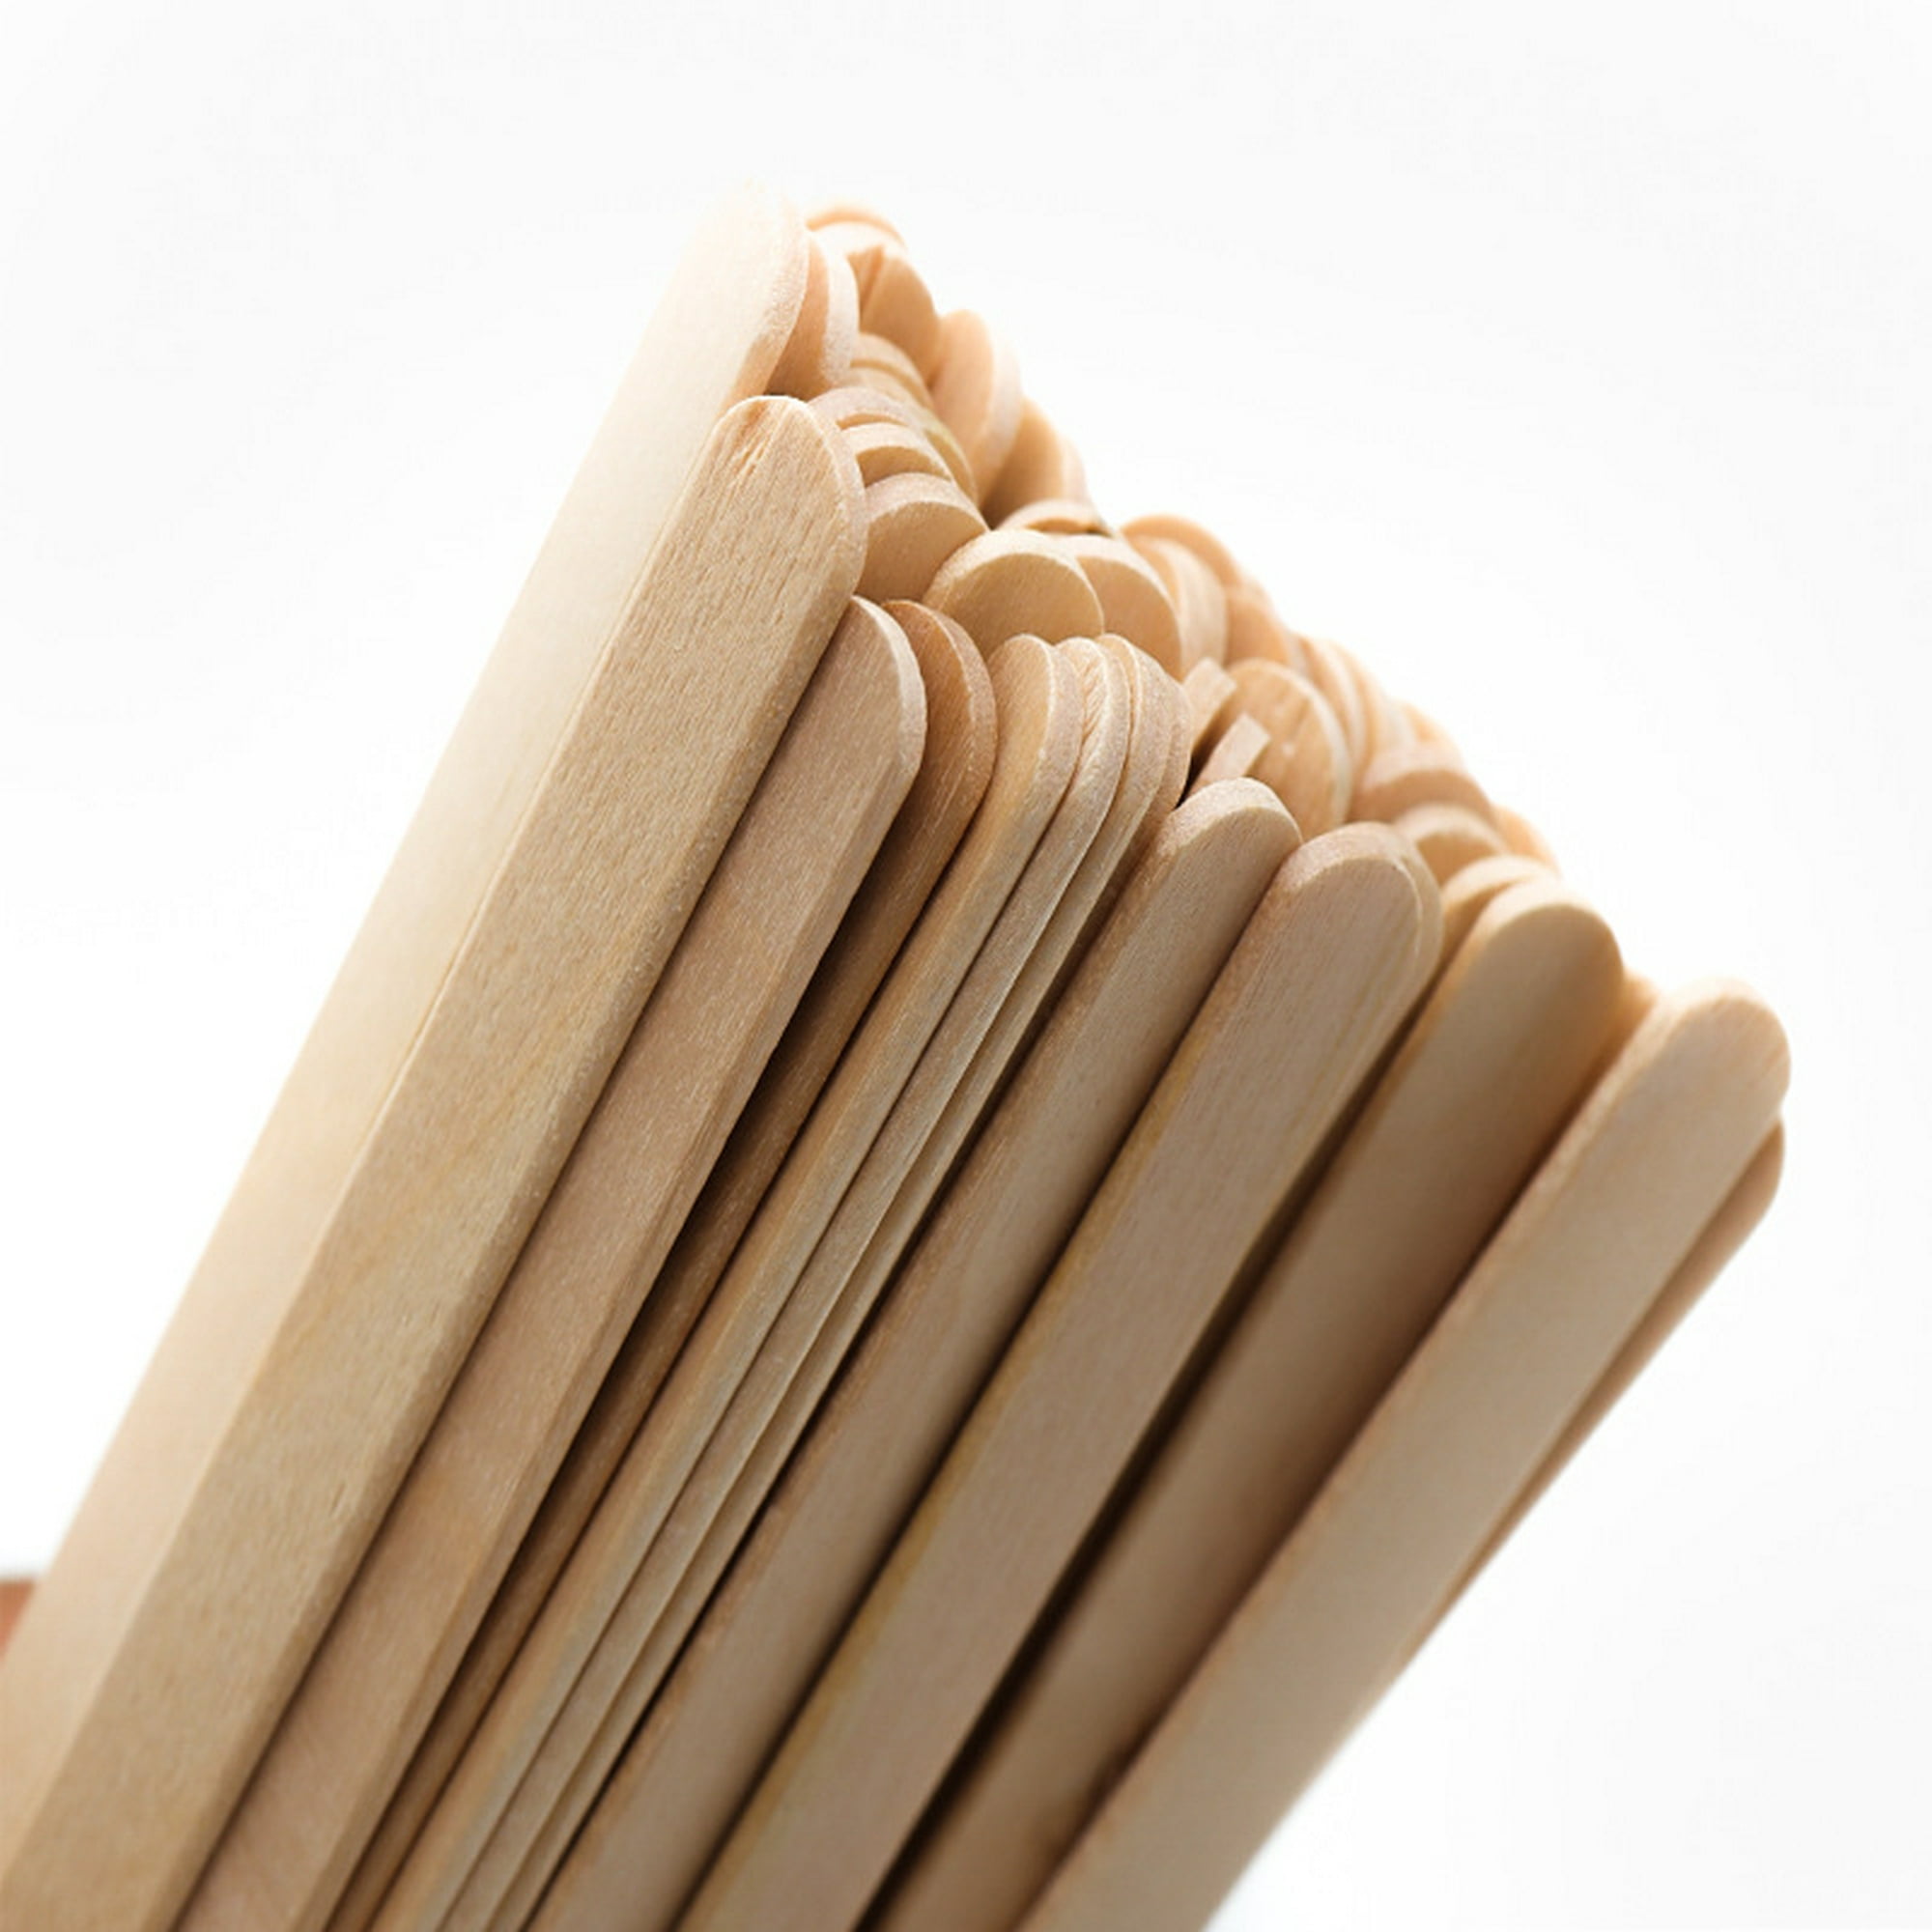 Palitos de bambú natural, palos de madera para manualidades, 15.75 pulgadas  de largo x 3/8 pulgadas de ancho (50 piezas)